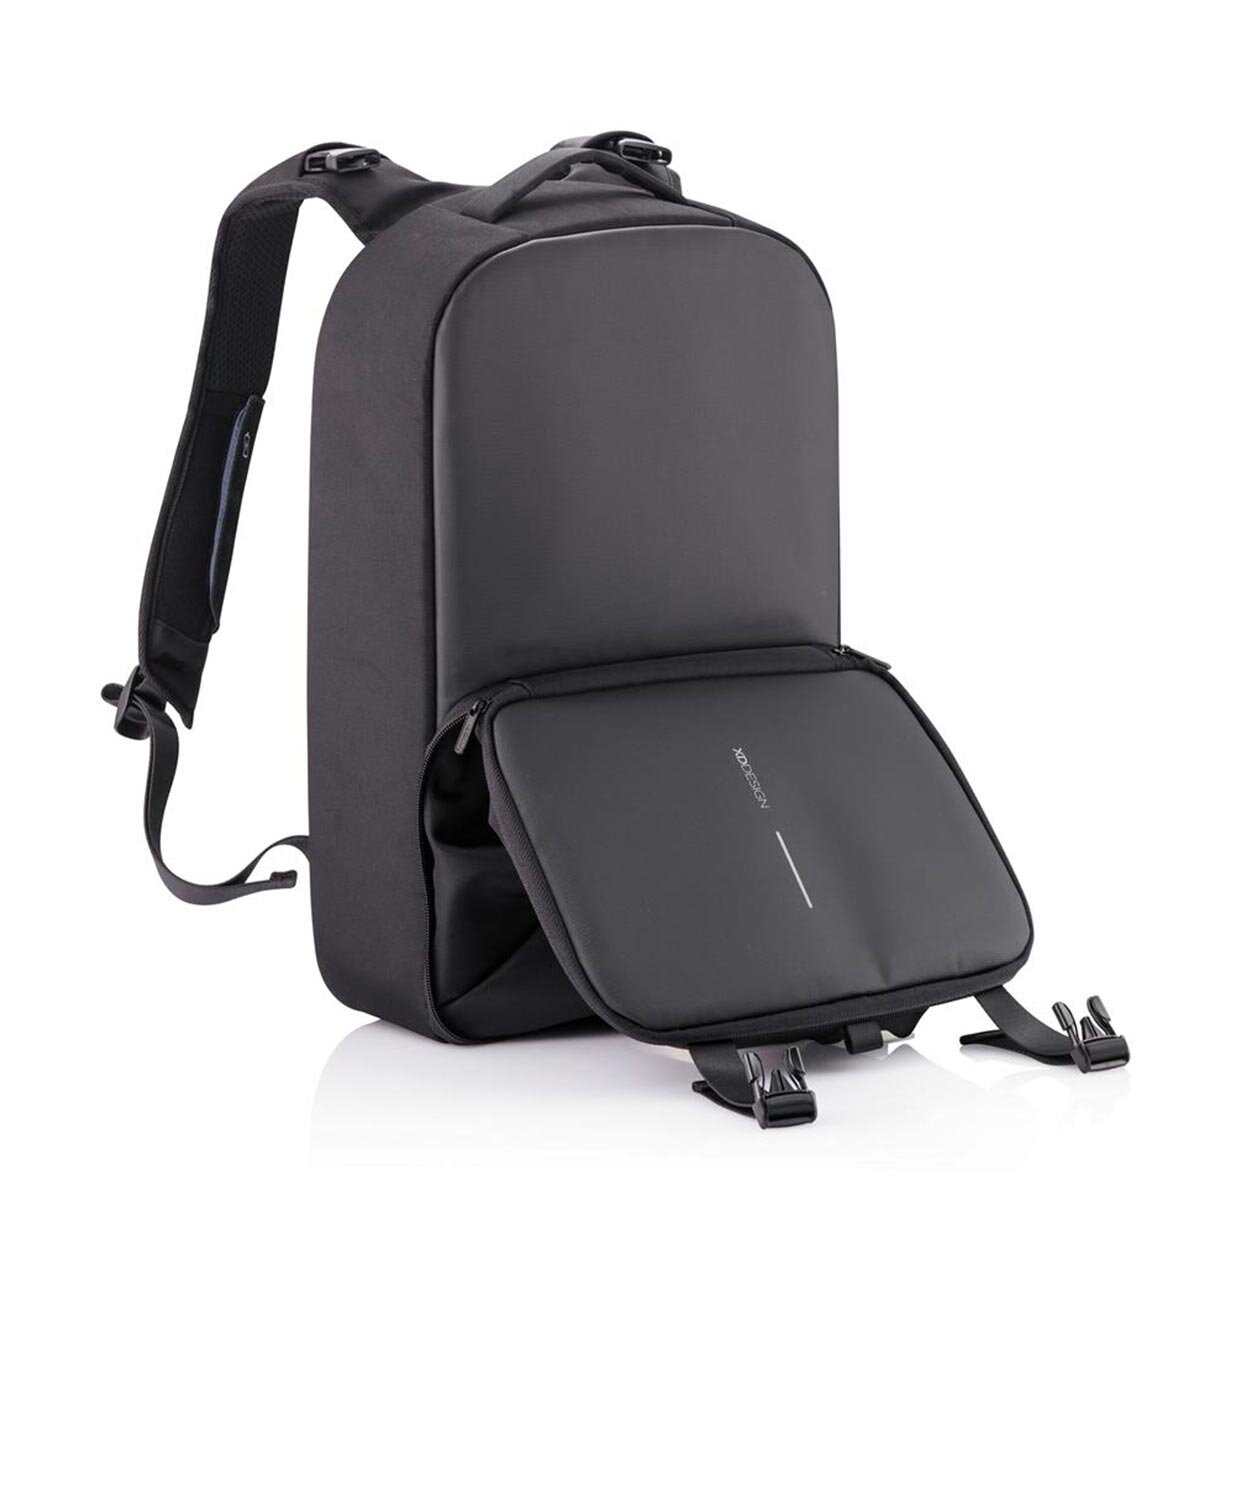 Flex Gym bag, black - XD Design